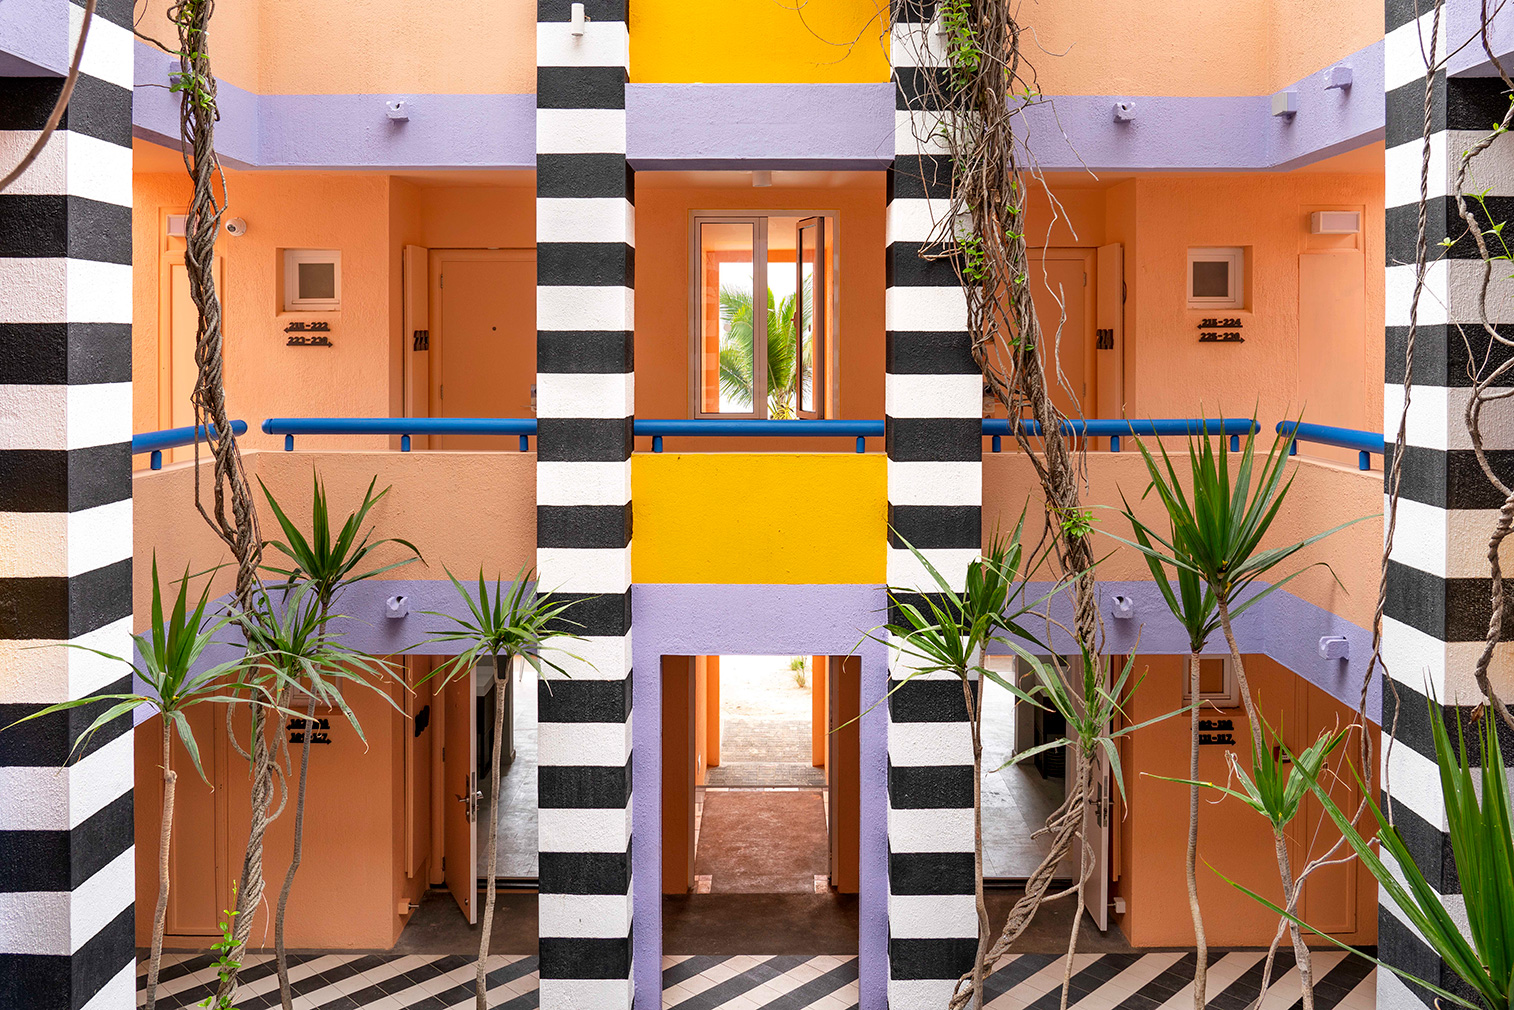 Camille Walala brings kaleidoscopic colour to Mauritius hotel SALT of Palmar